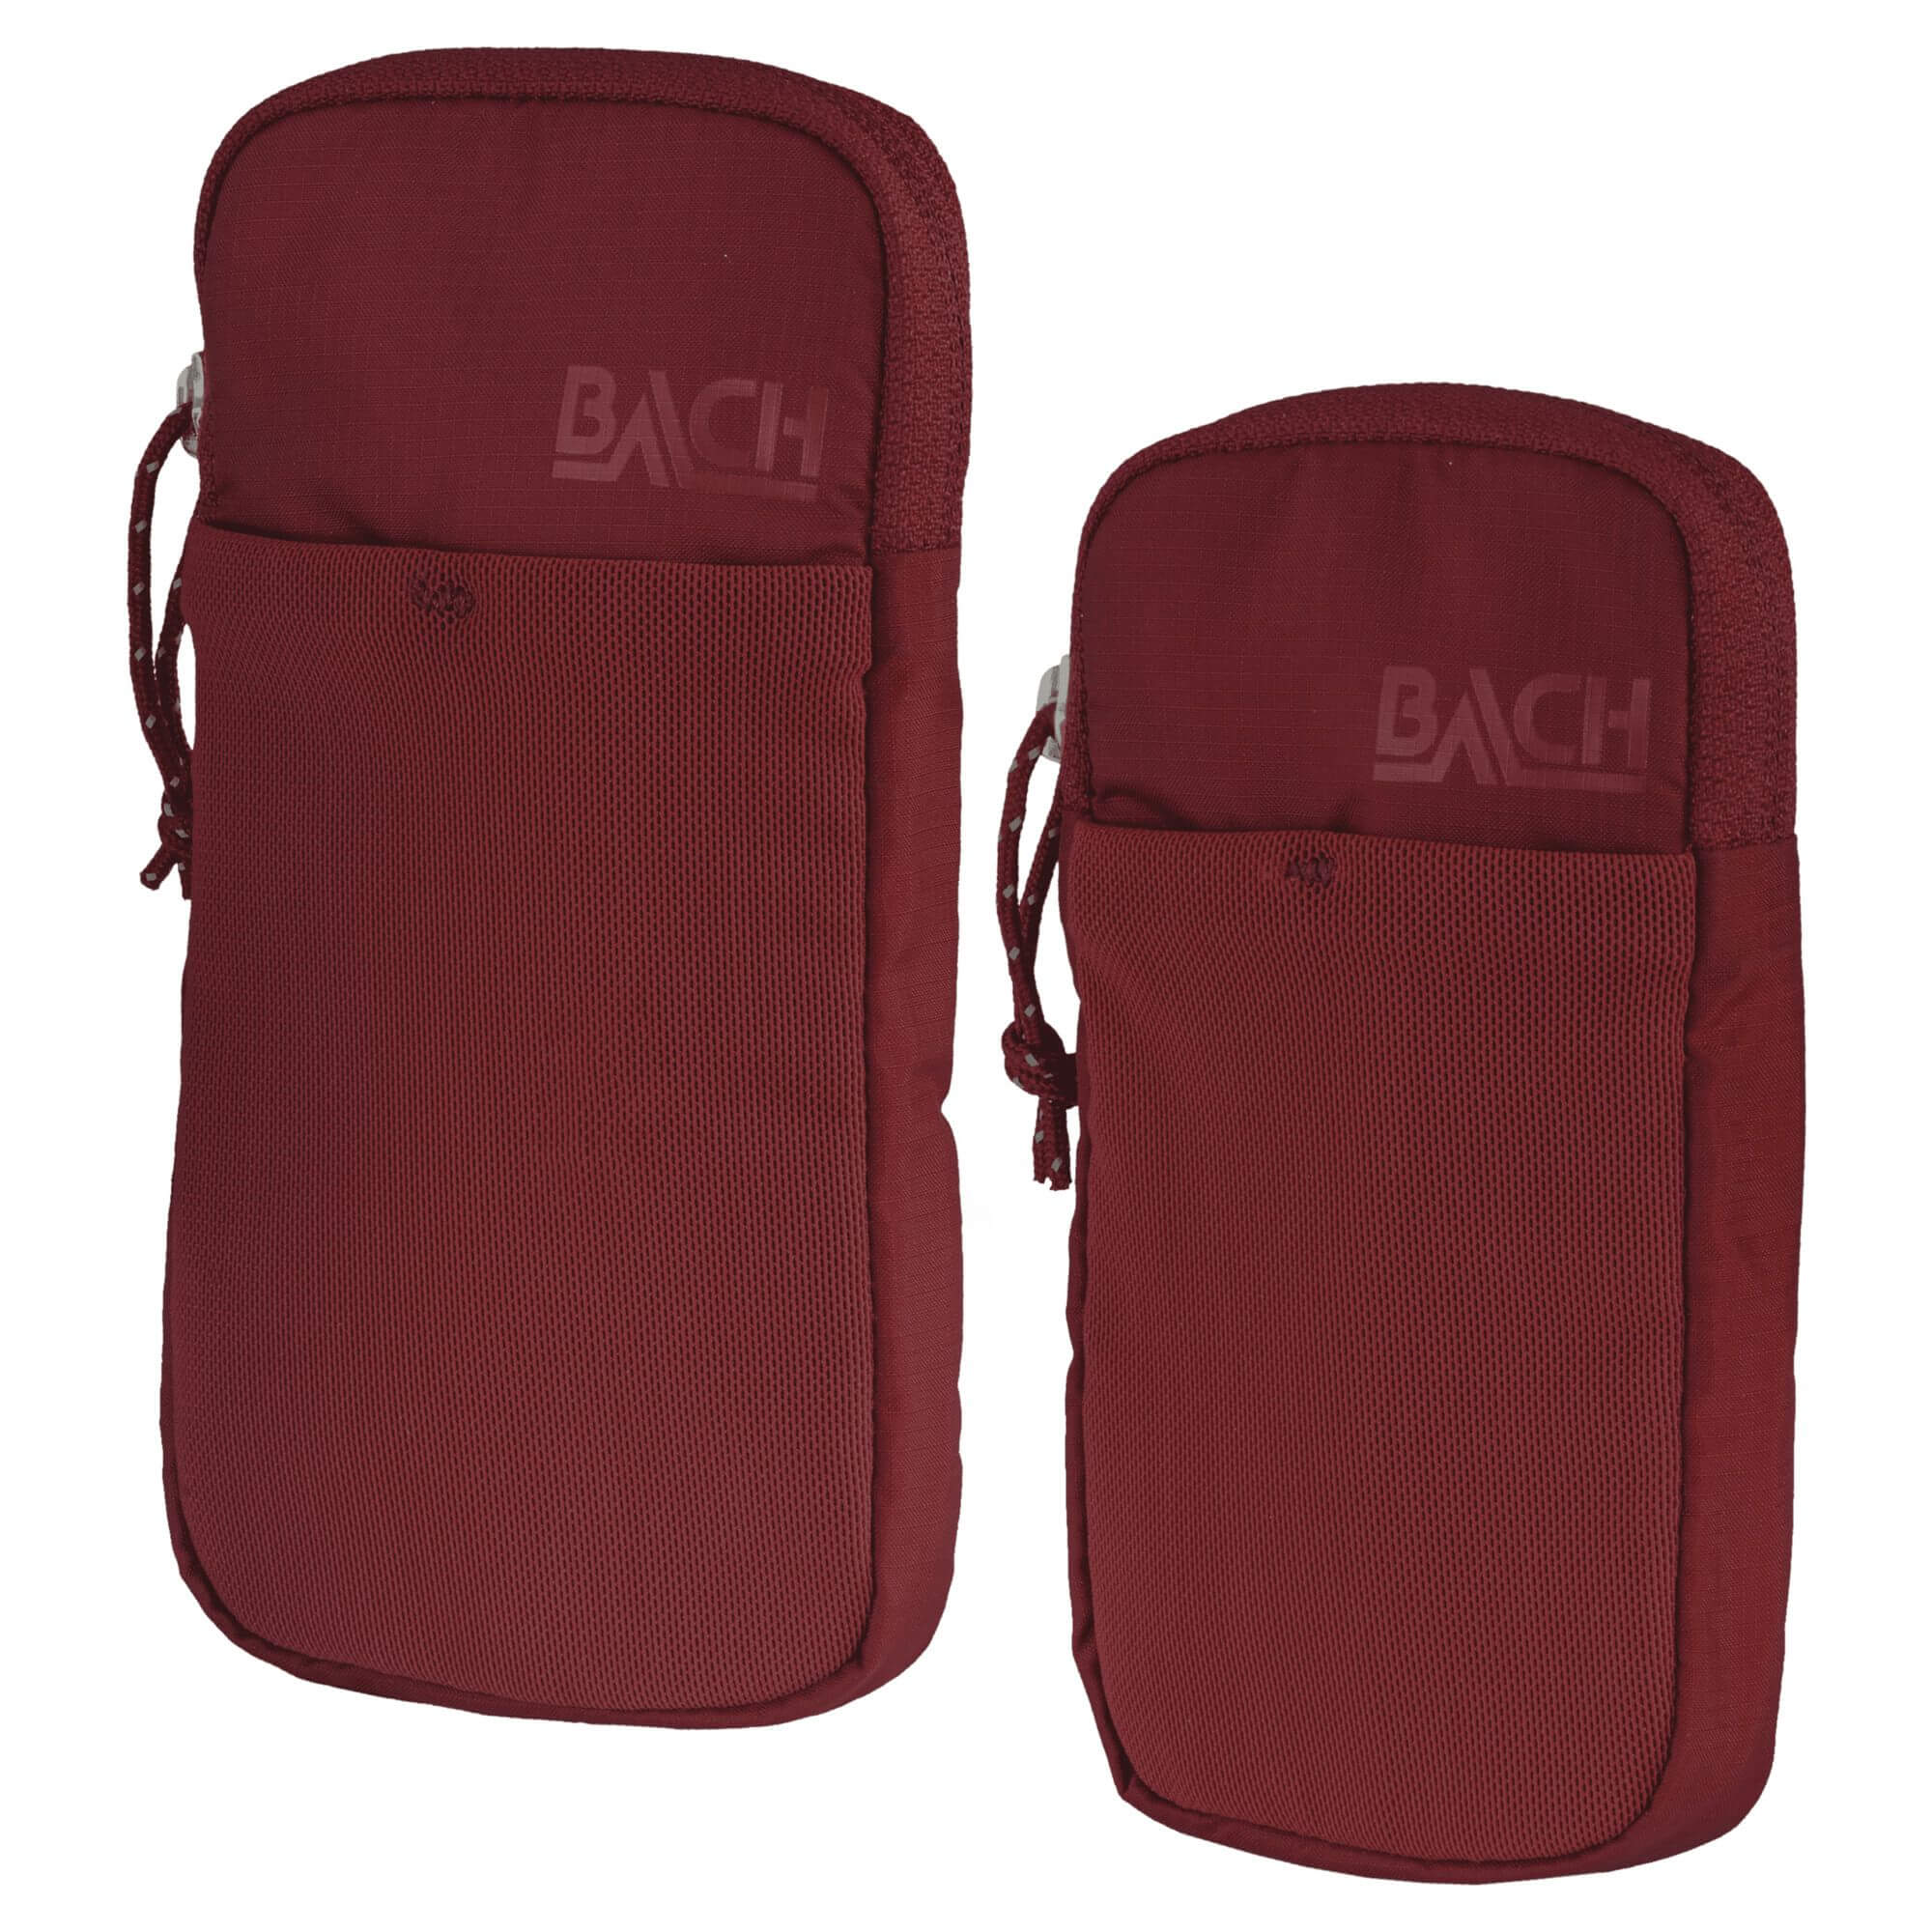 Bach Shoulder Pocket gepolstert red dahlia small